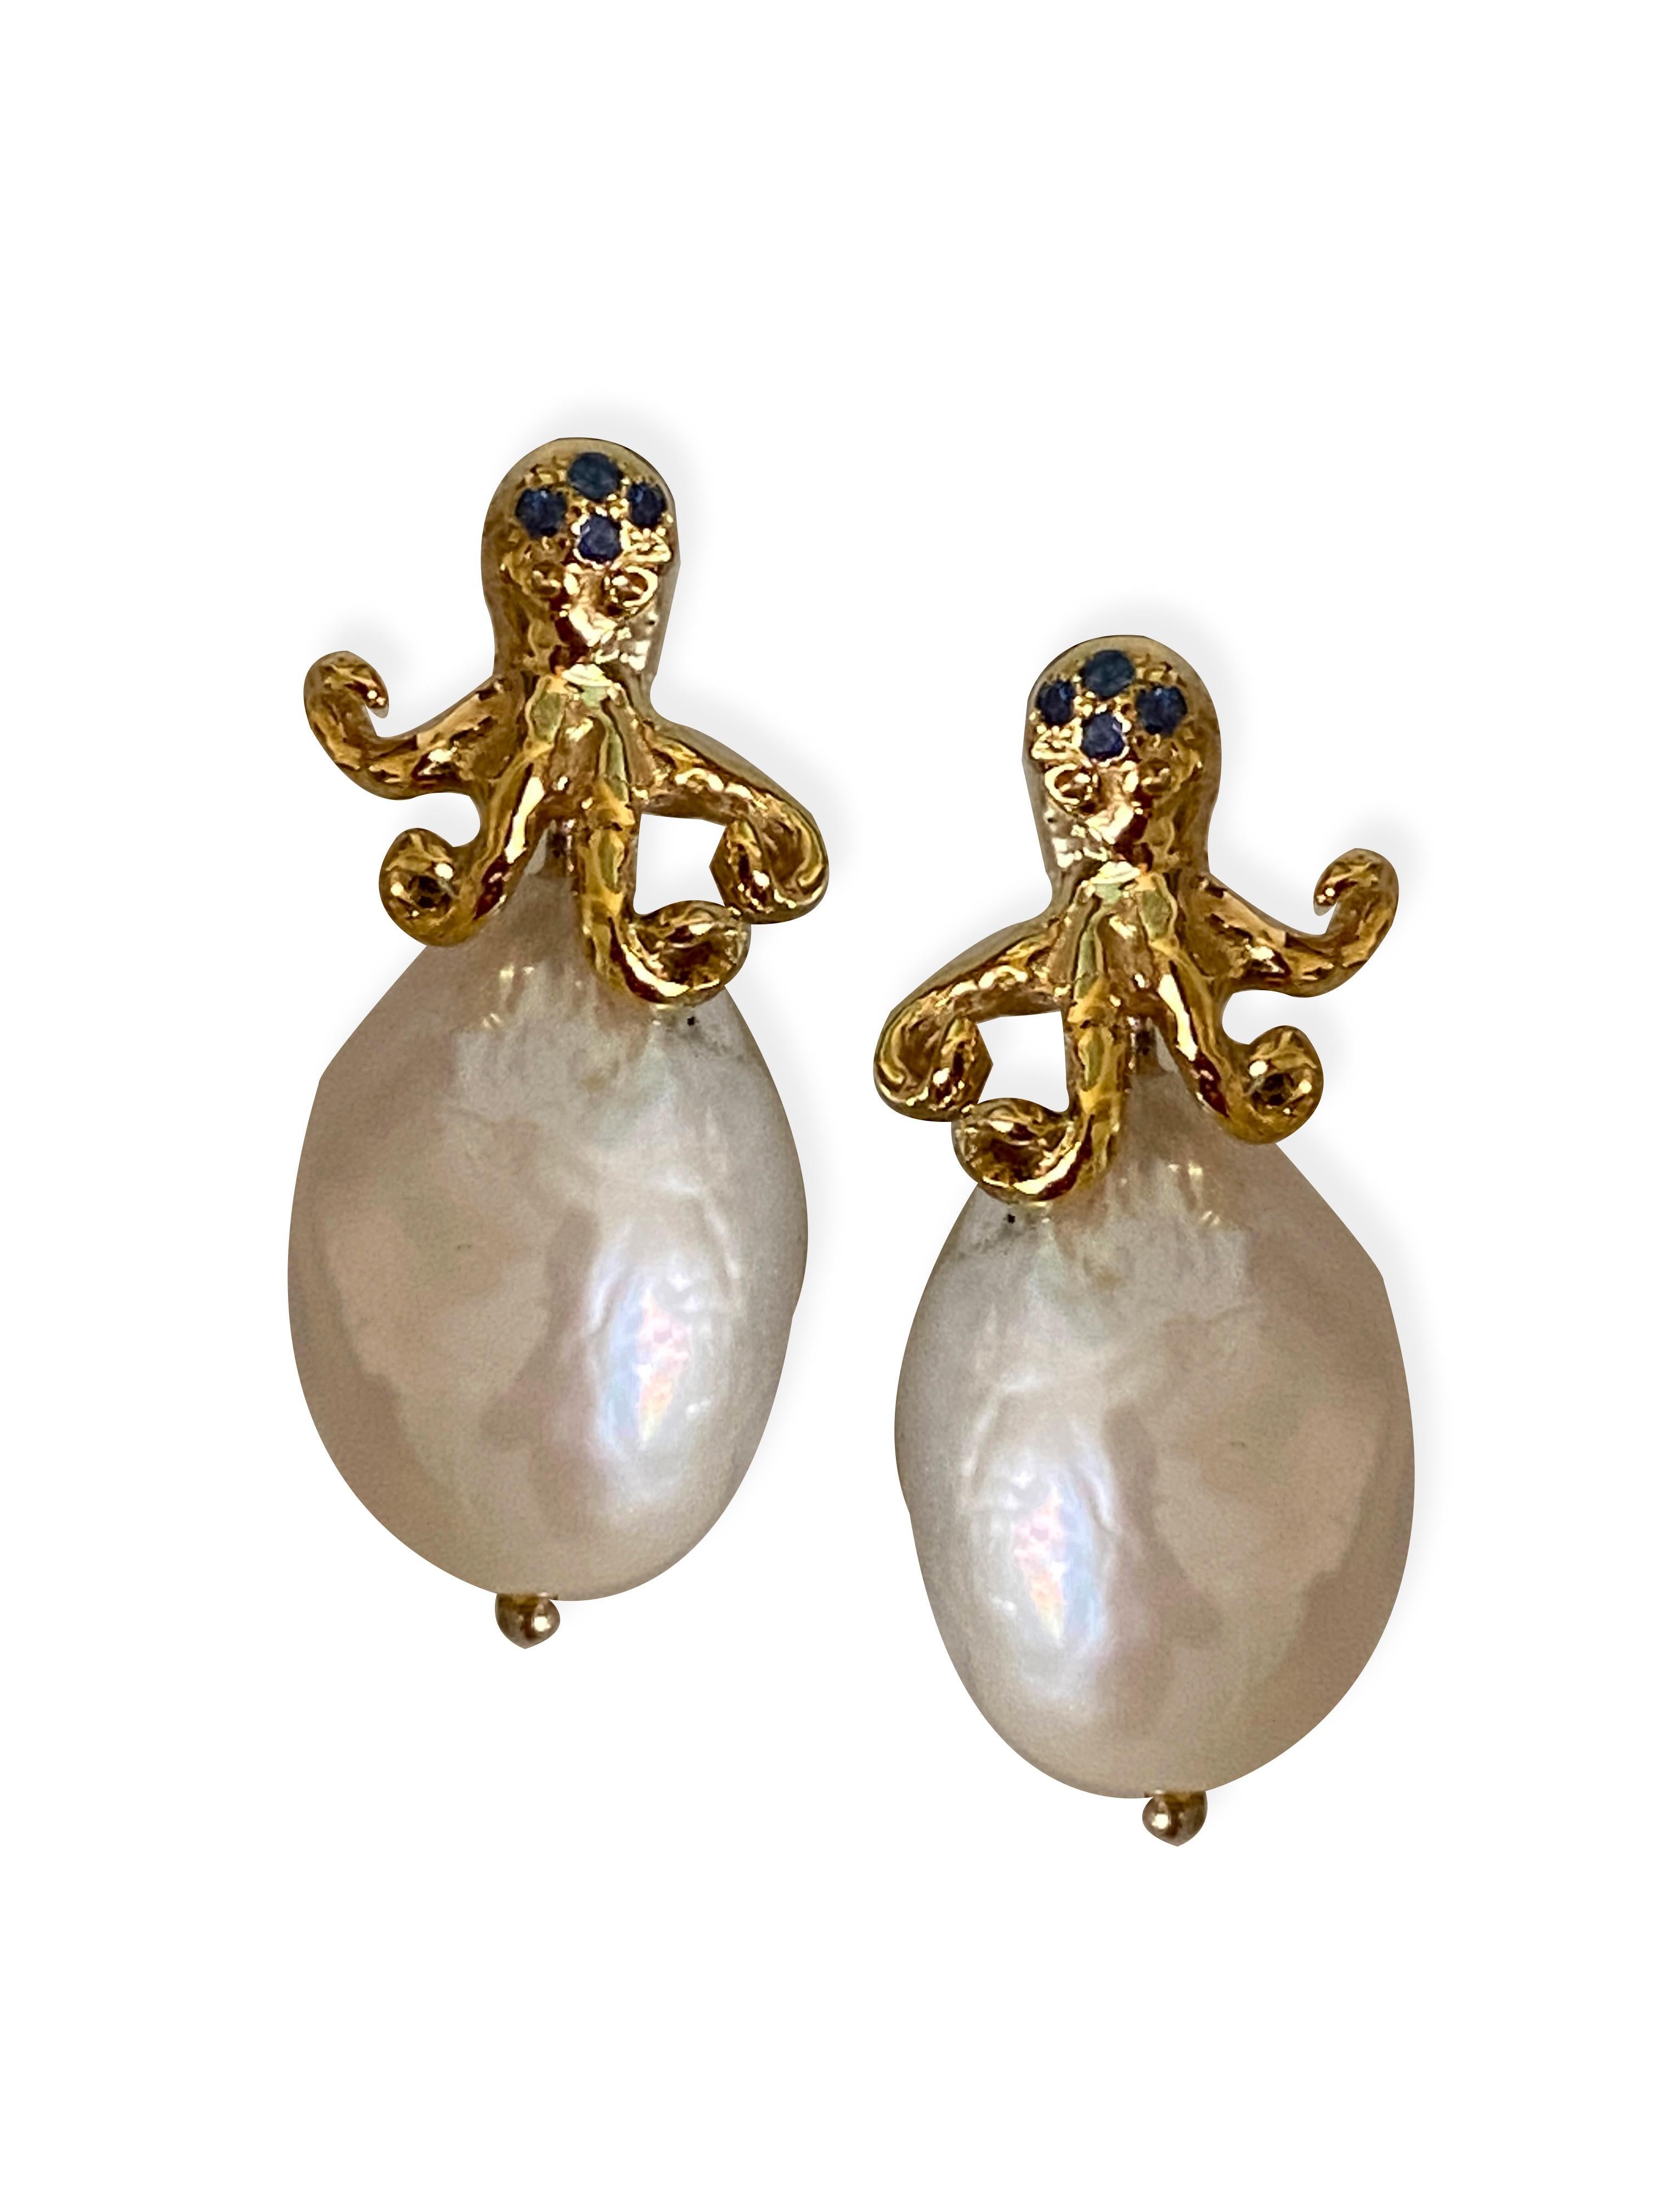 Brilliant Cut Rossella Ugolini Ocean-Inspired 18K Gold Octopus Sapphires Baroque Earrings  For Sale